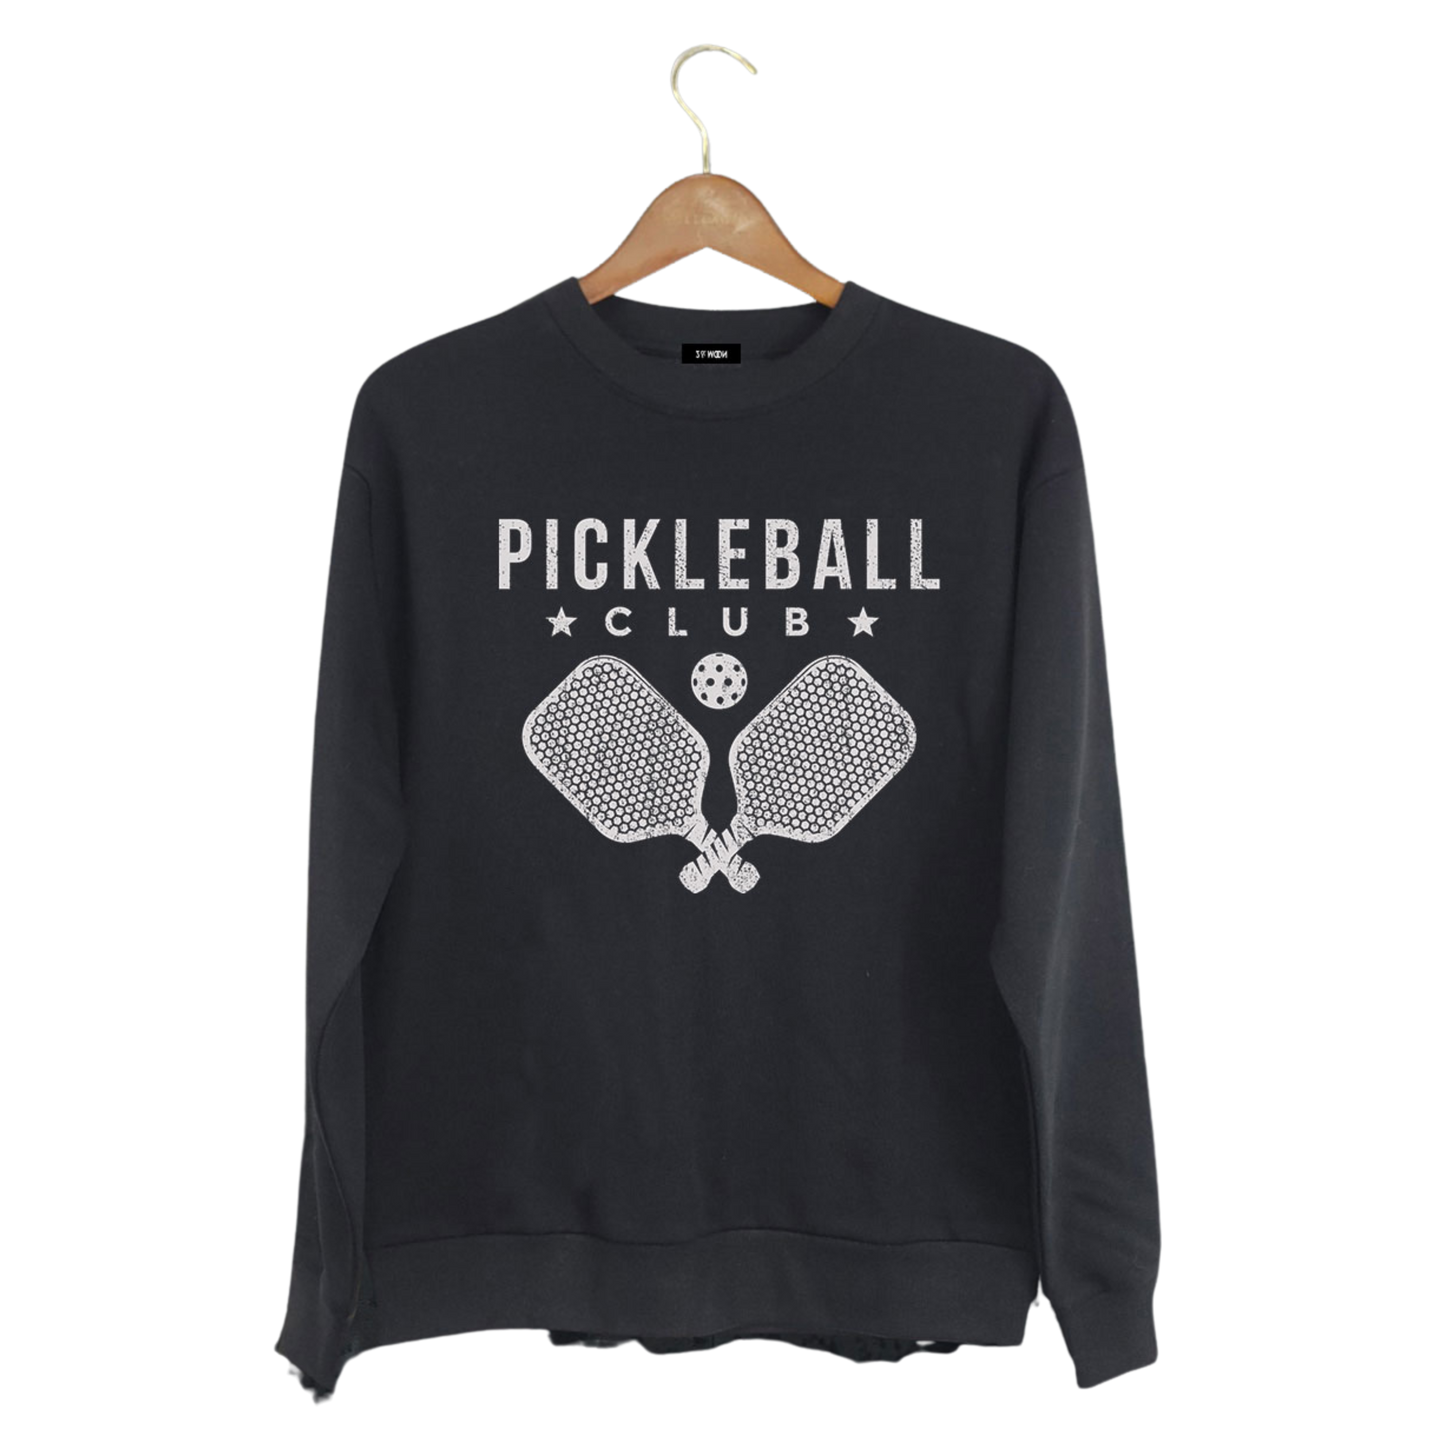 Pickleball Club Sweatshirts - Assorted Colors